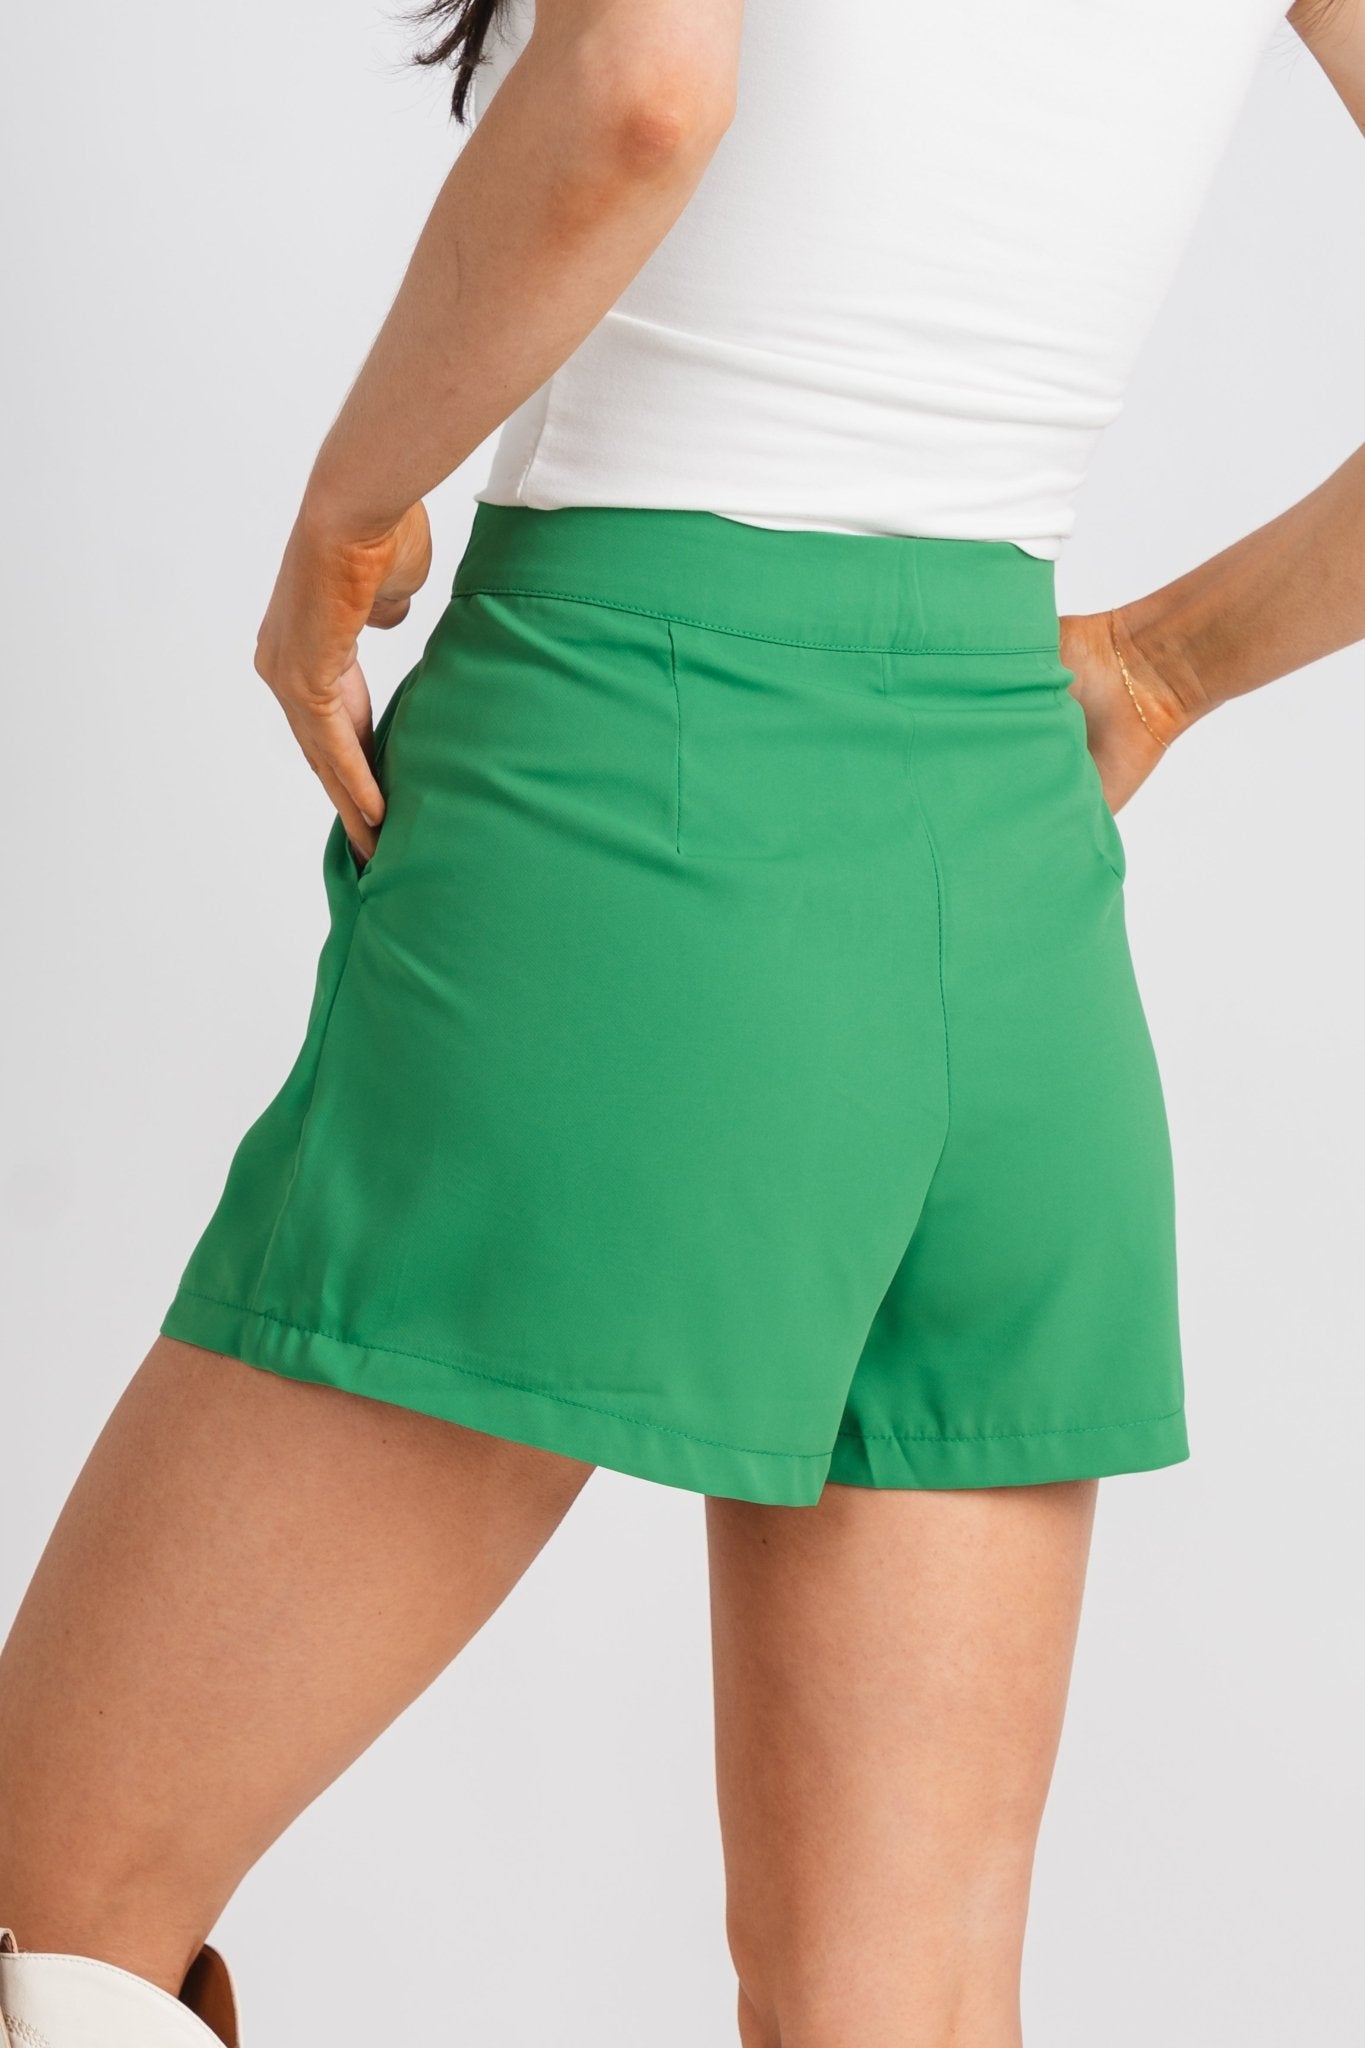 Pleat detail shorts green Stylish Shorts - Womens Fashion Shorts at Lush Fashion Lounge Boutique in Oklahoma City